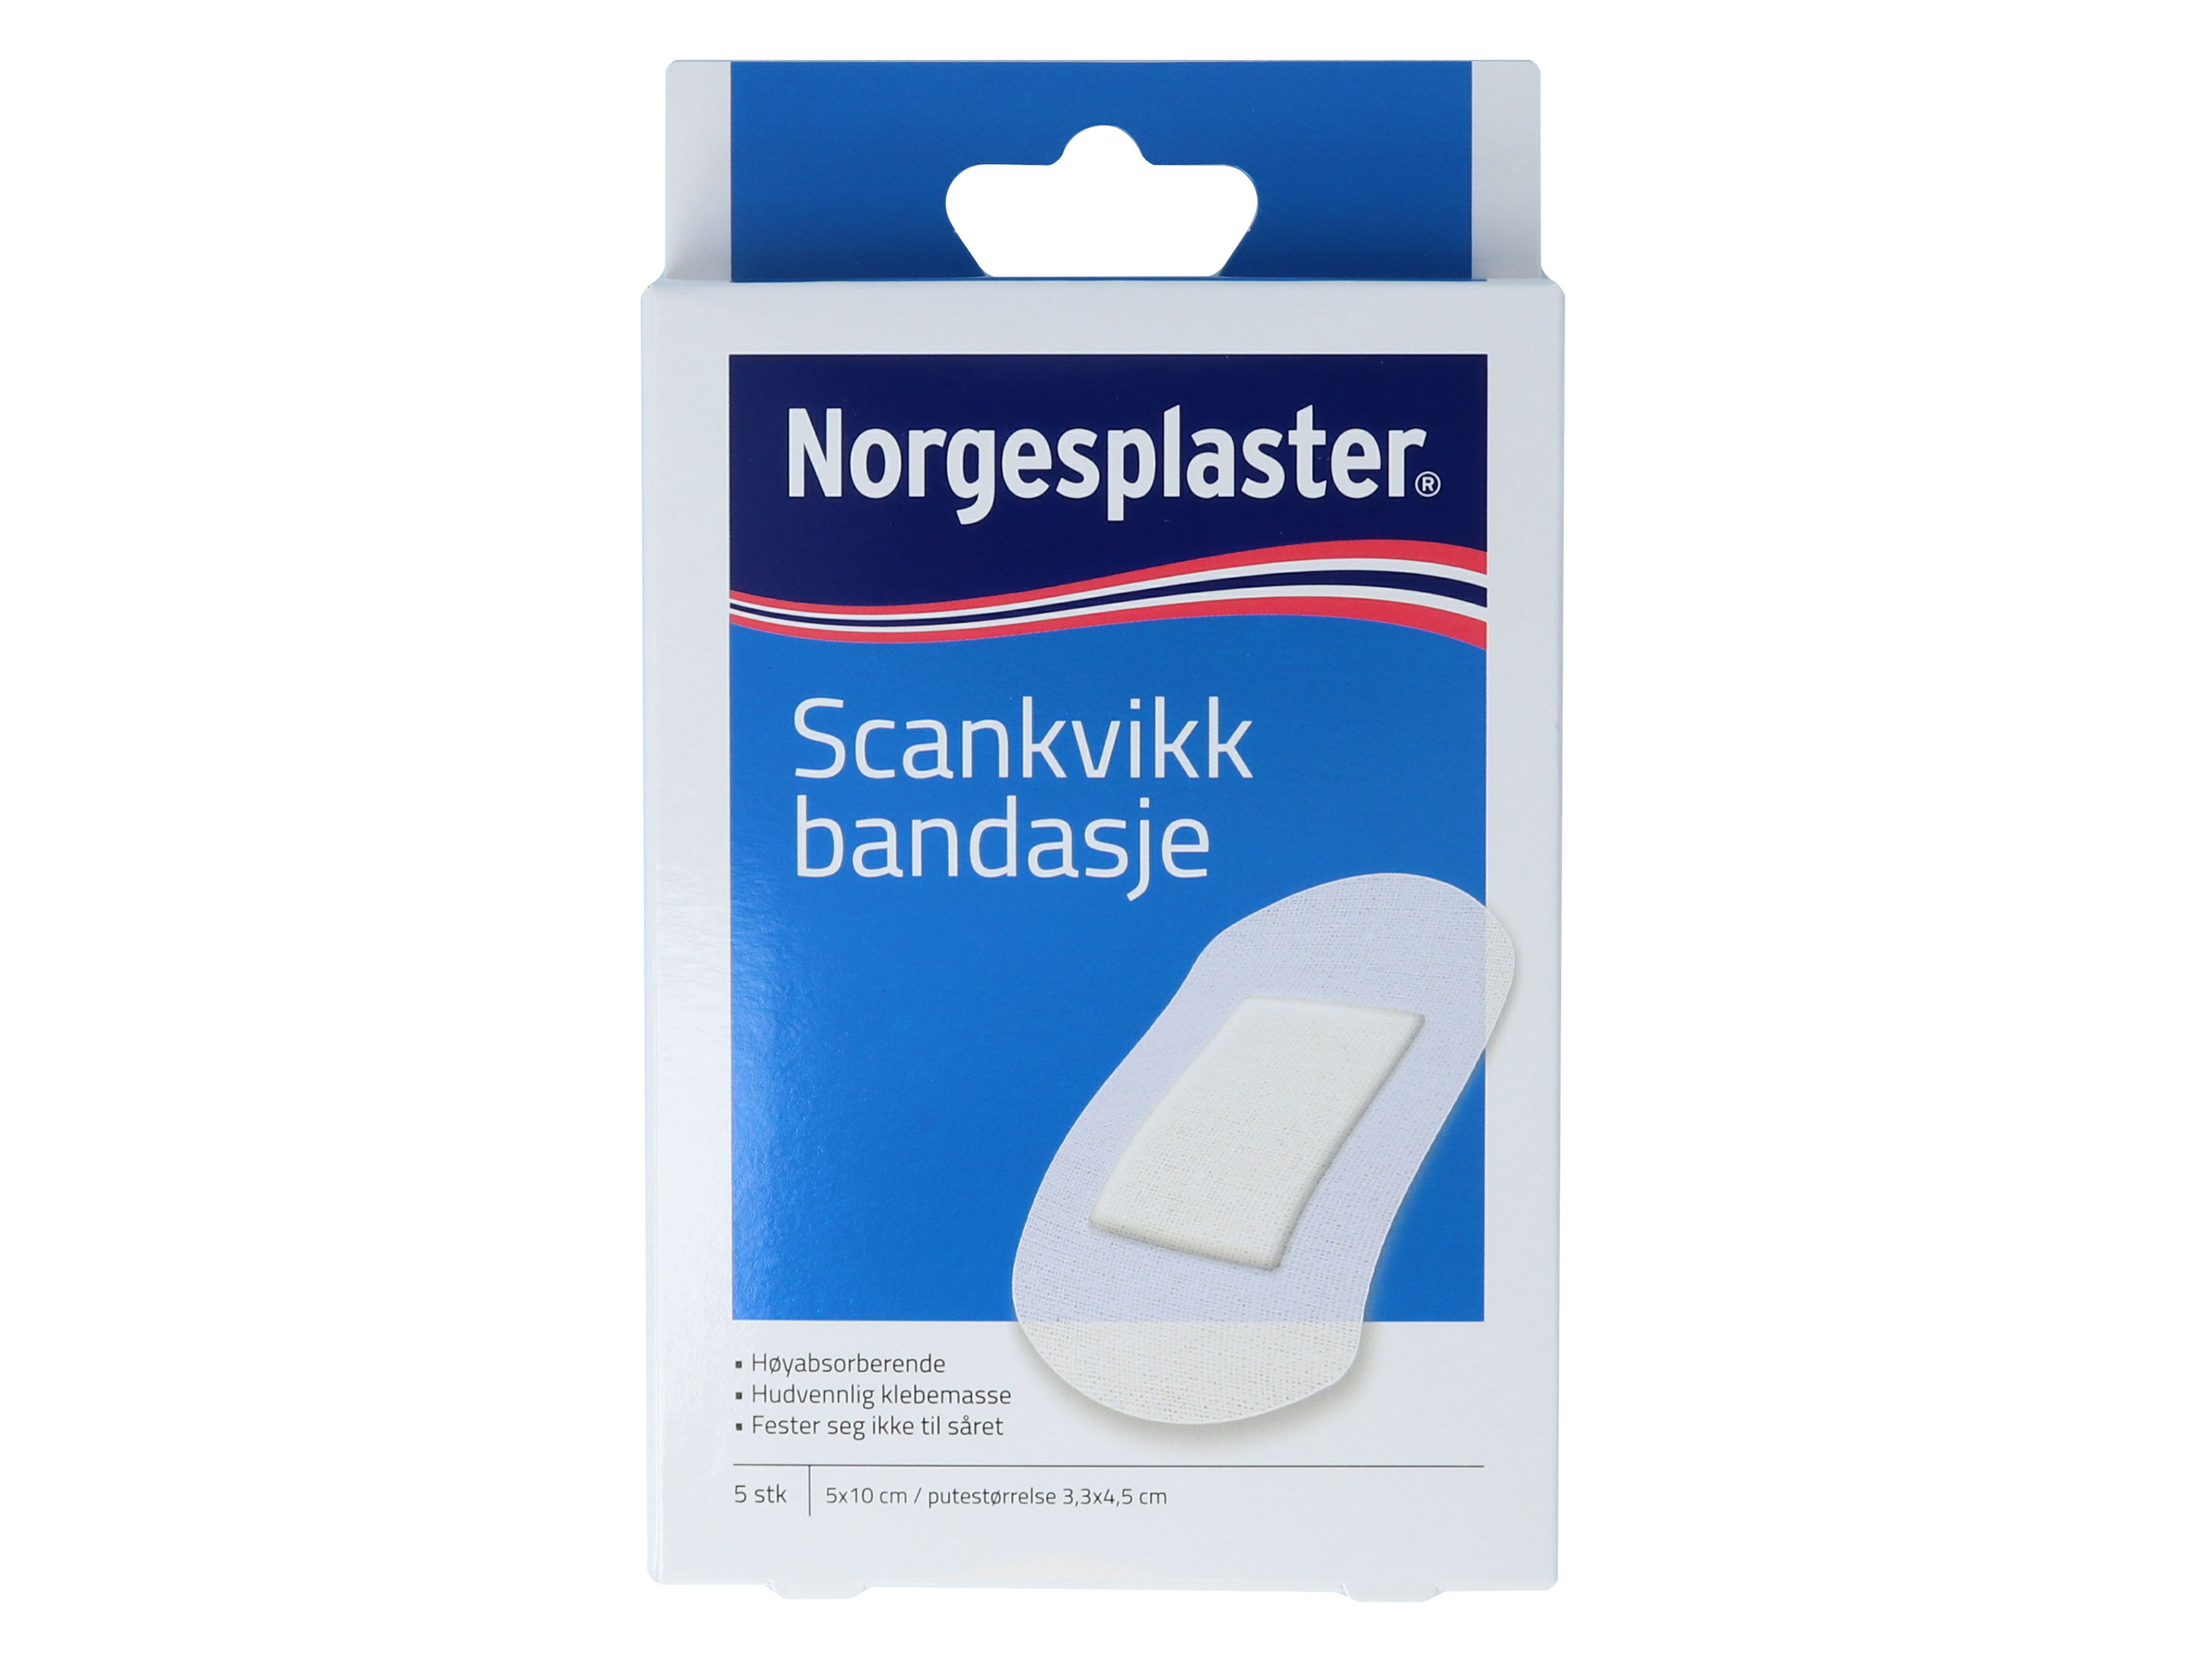 Norgesplaster Scankvikk bandasje, 5x10 cm, 5 stk.